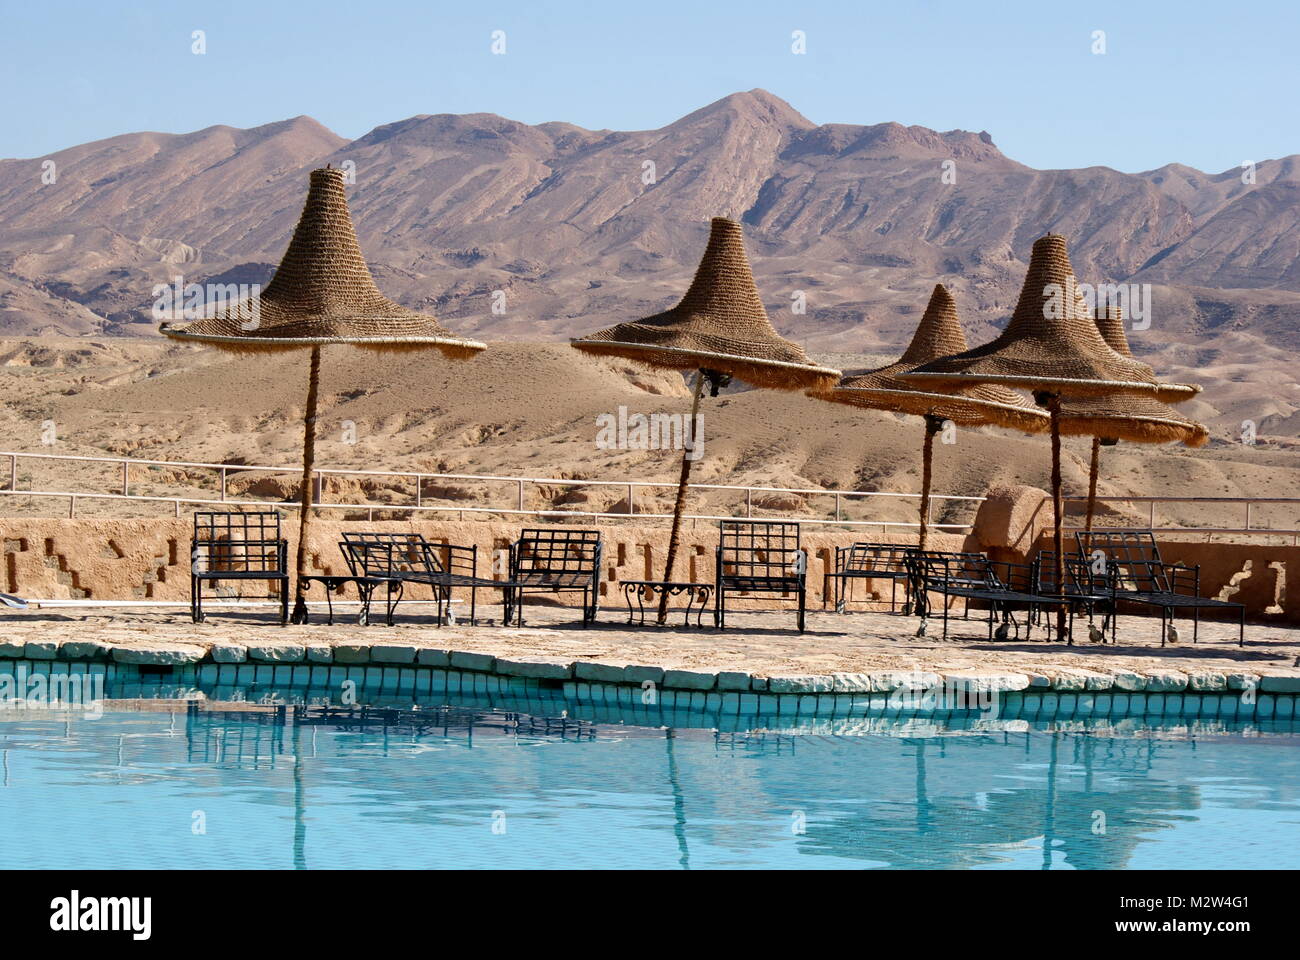 Tamerza Palace Hotel pool with a mountain view, Tamerza, Tunisia Stock Photo